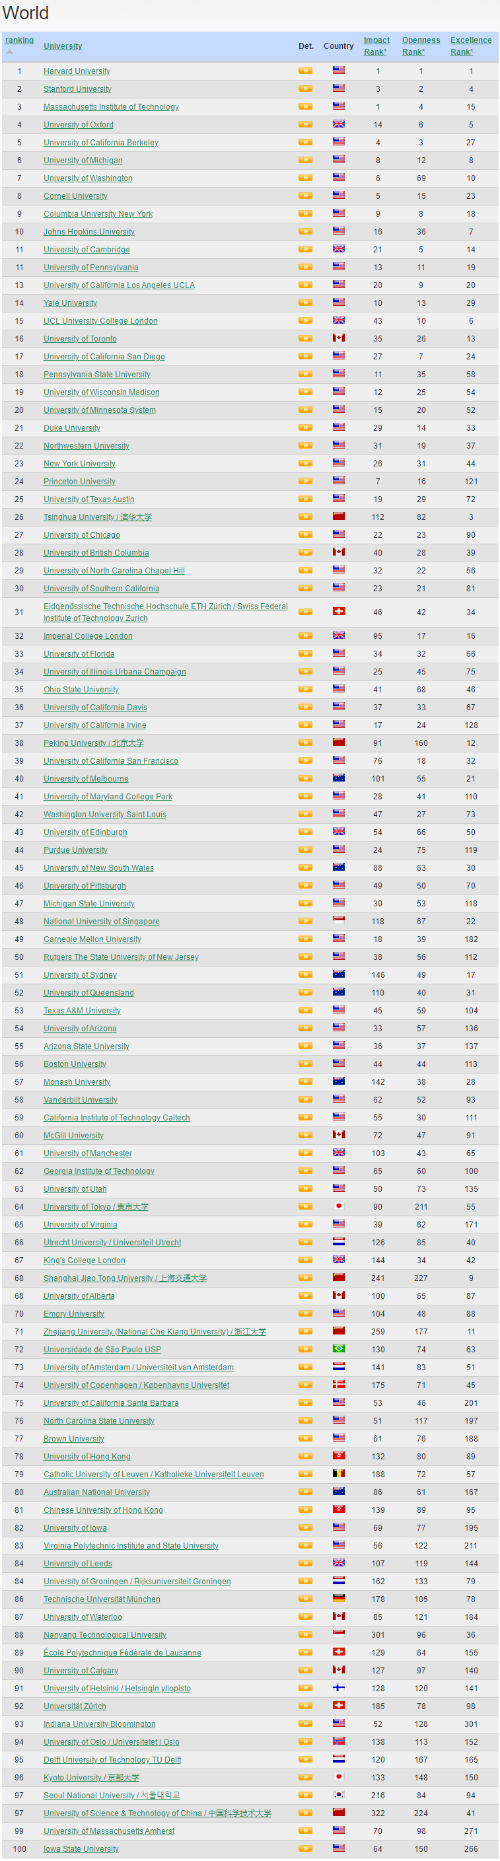 WRWU世界大学排名中各国排名情况分析